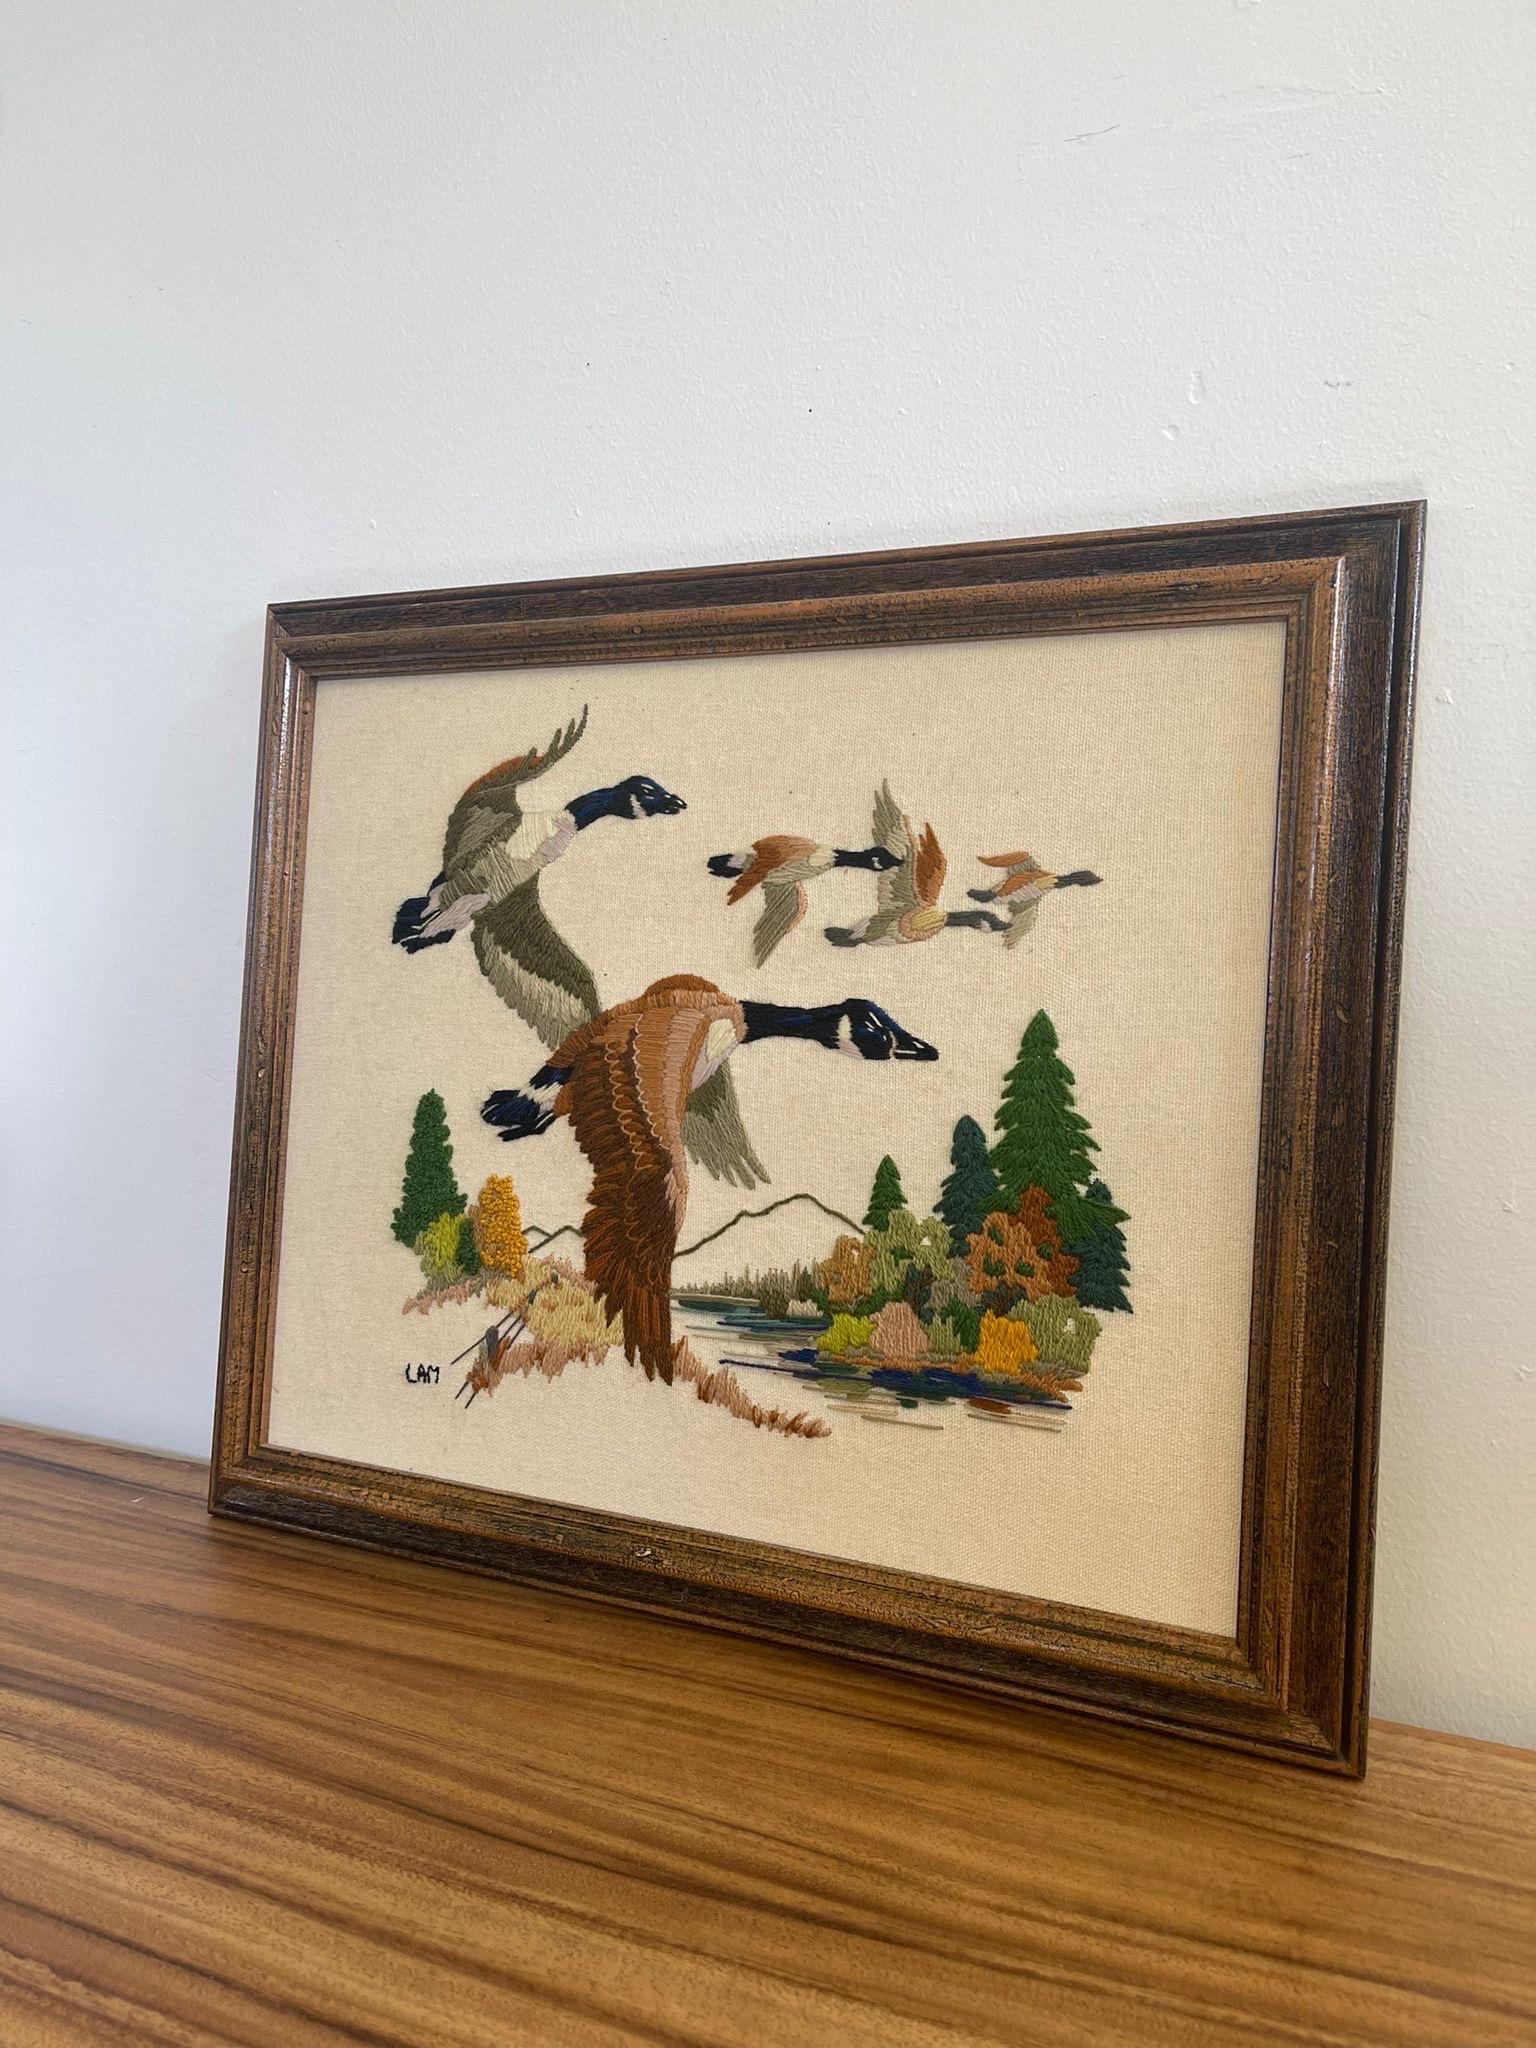 Mid-Century Modern Vintage Handmade Geese Needlepoint Embroidery Artwork Within Wood Frame.